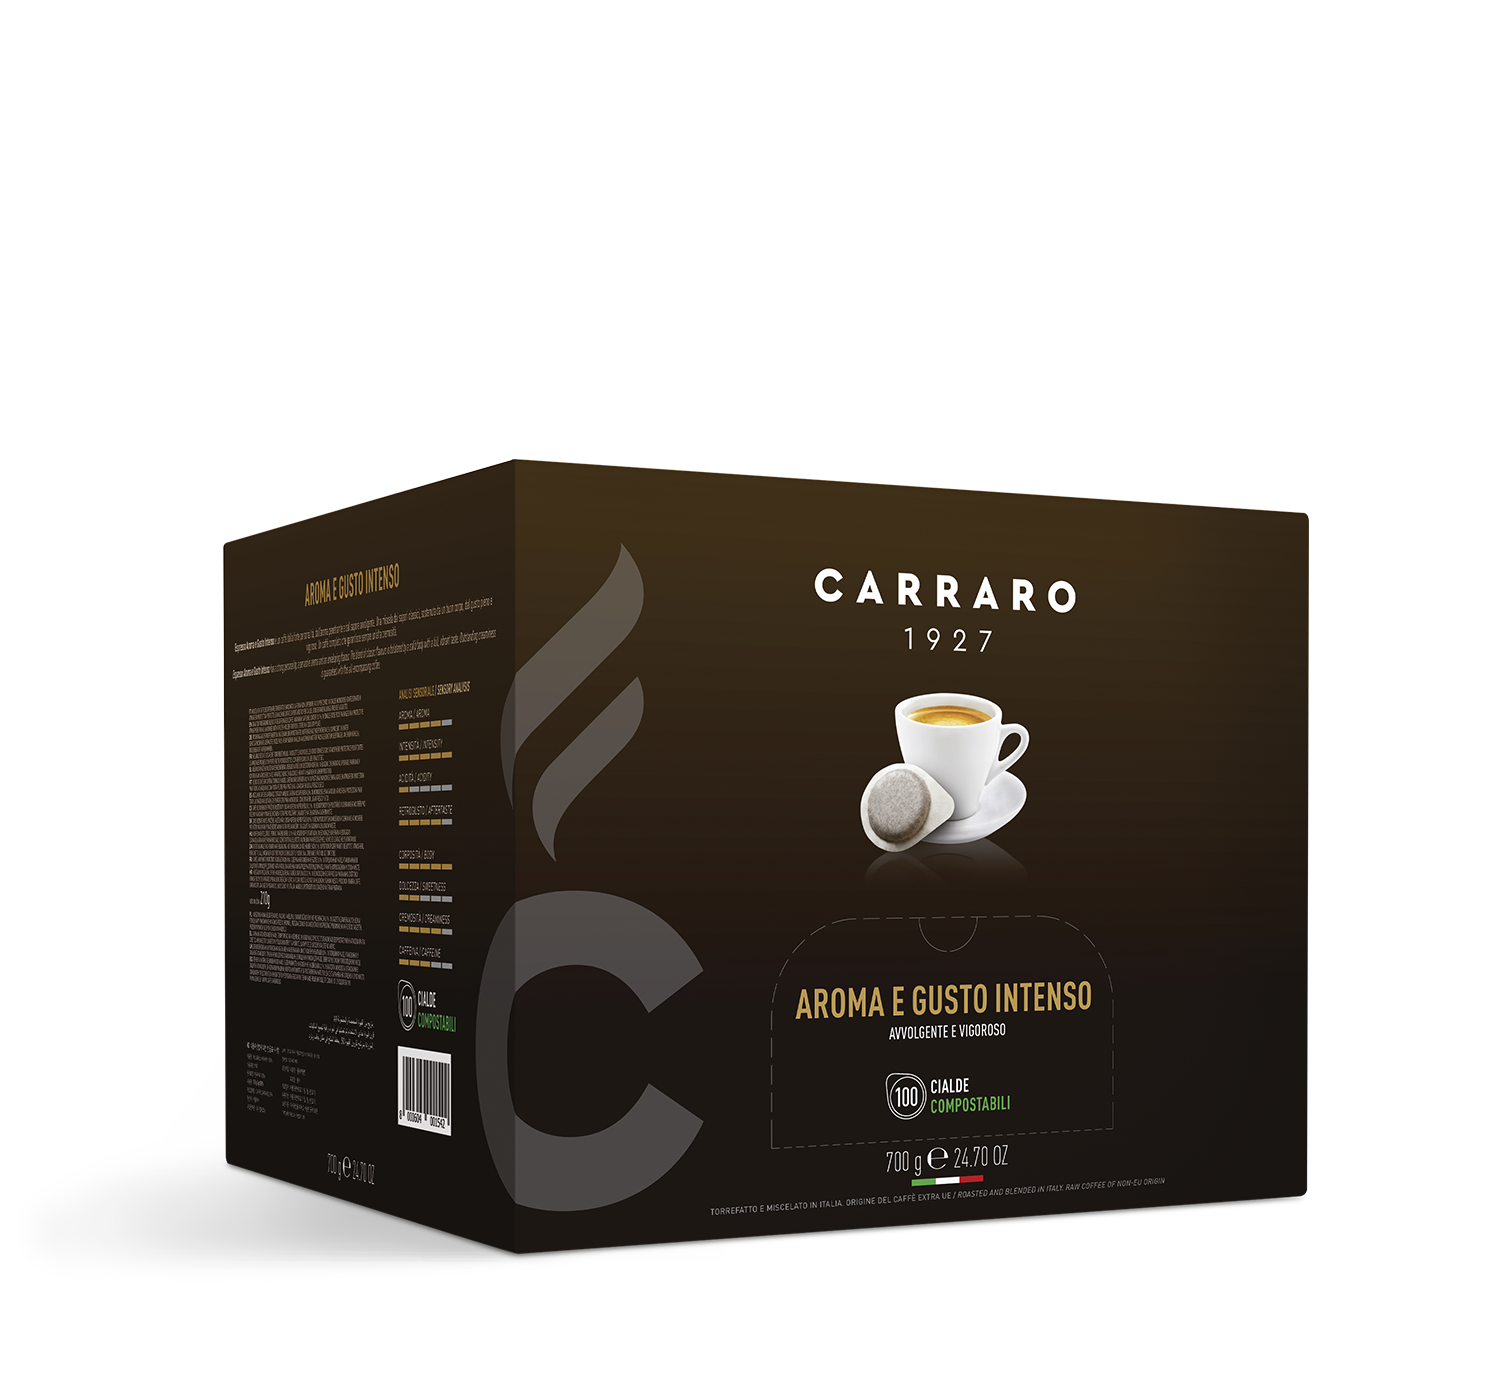 Retail - Espresso aroma e gusto intenso – 100 pods 7 g - Shop online Caffè Carraro